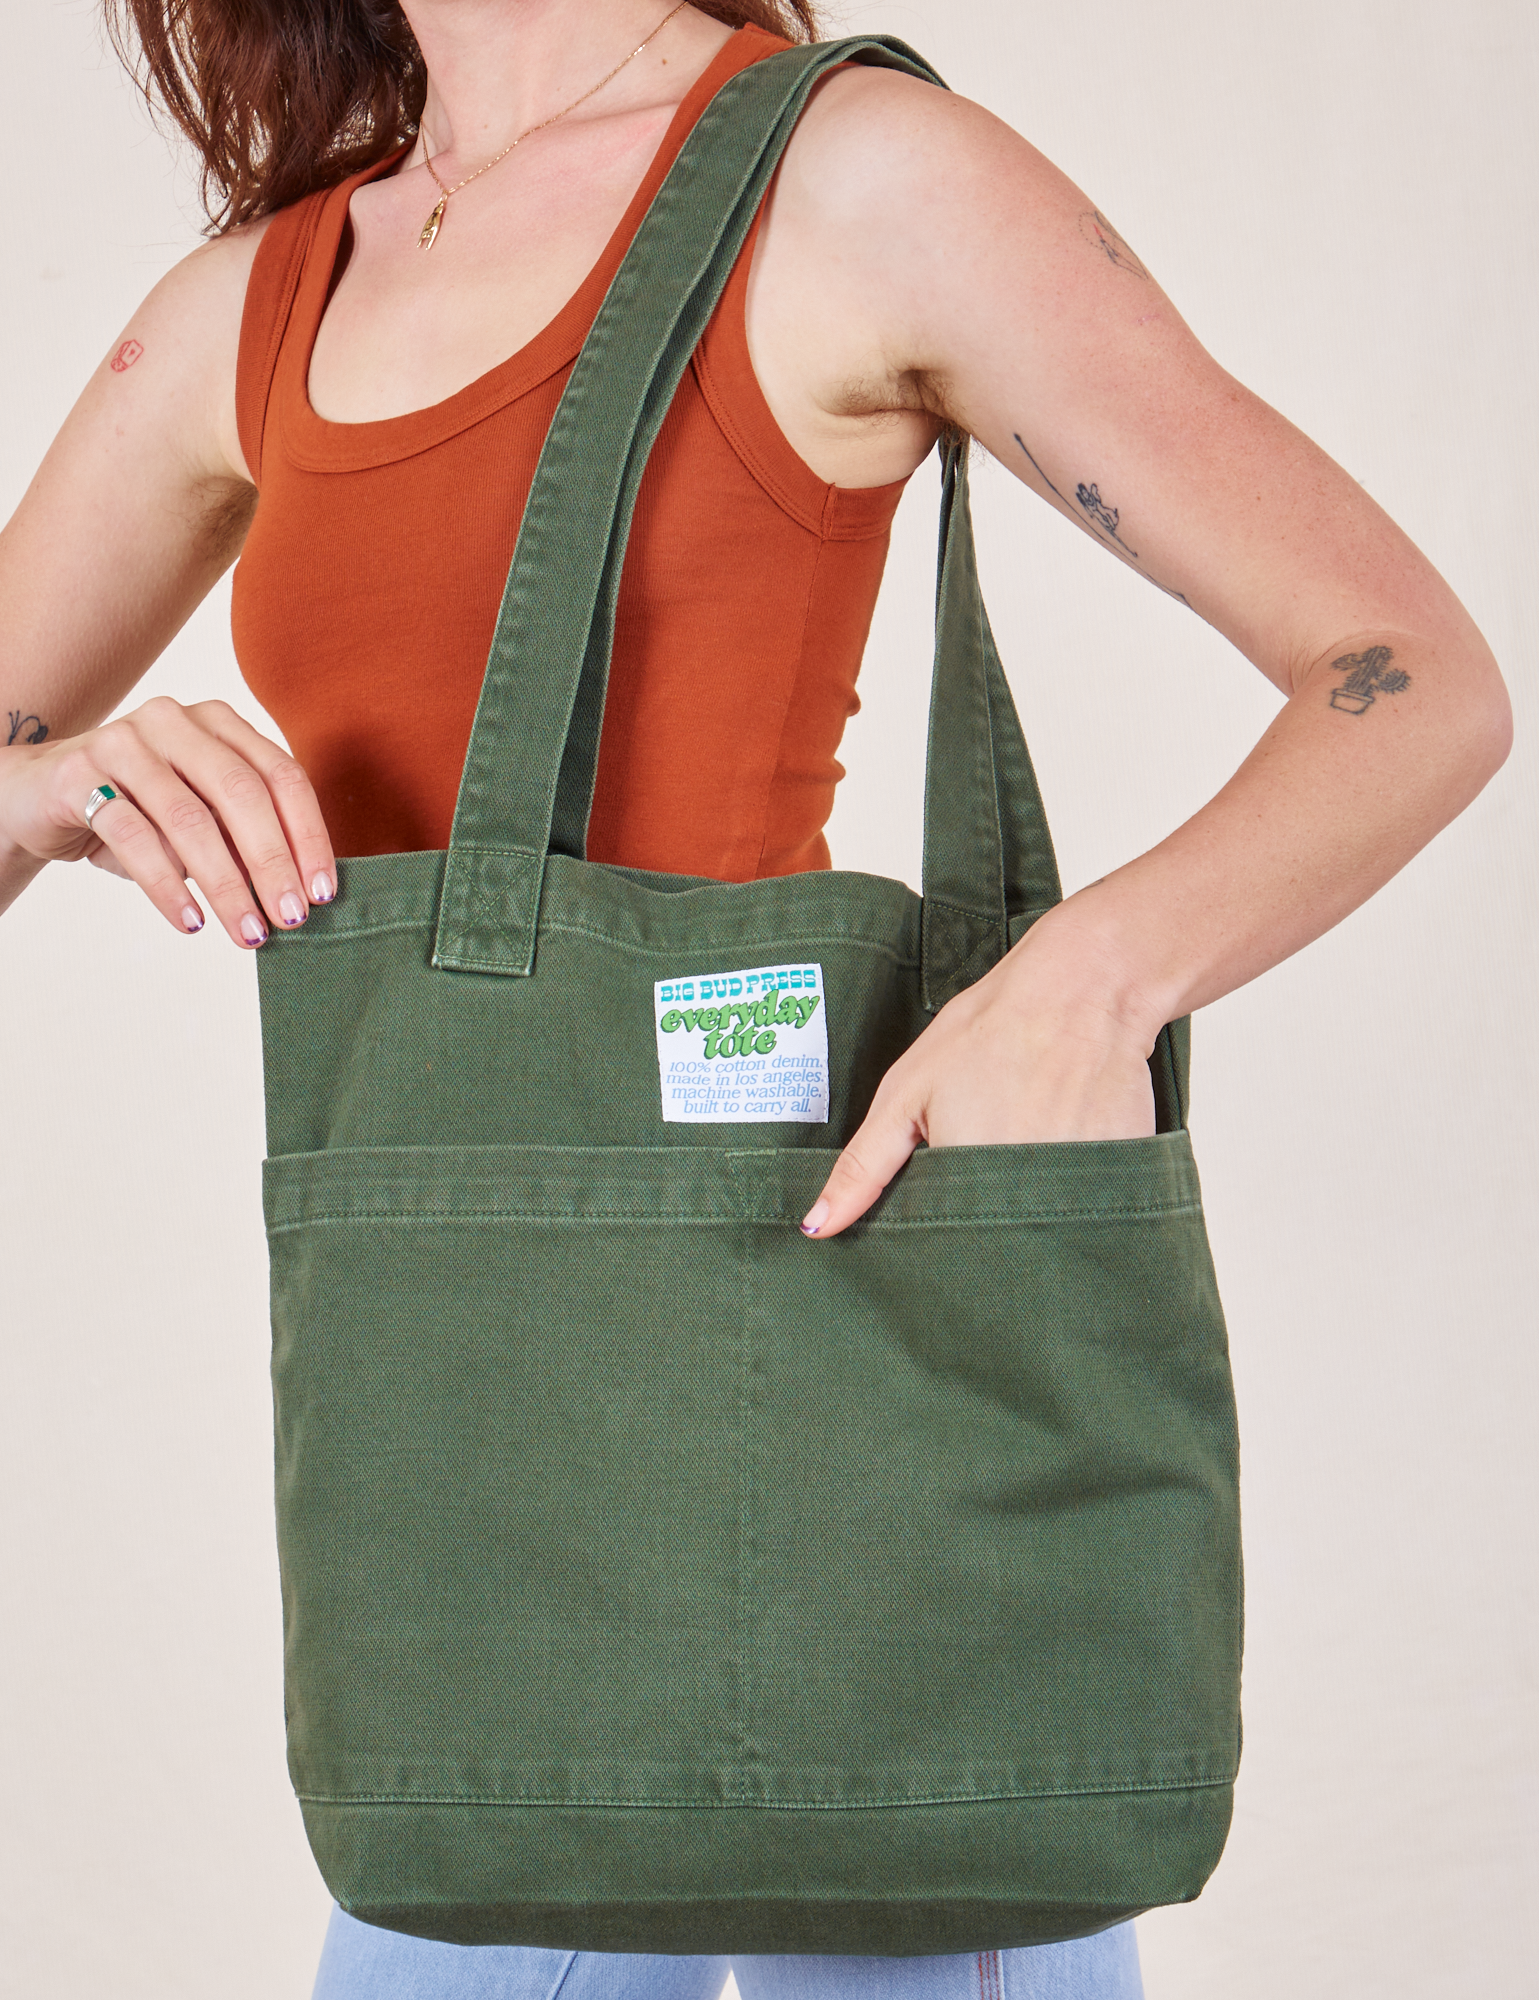 Everyday Tote Bag in Dark Emerald Green worn by model